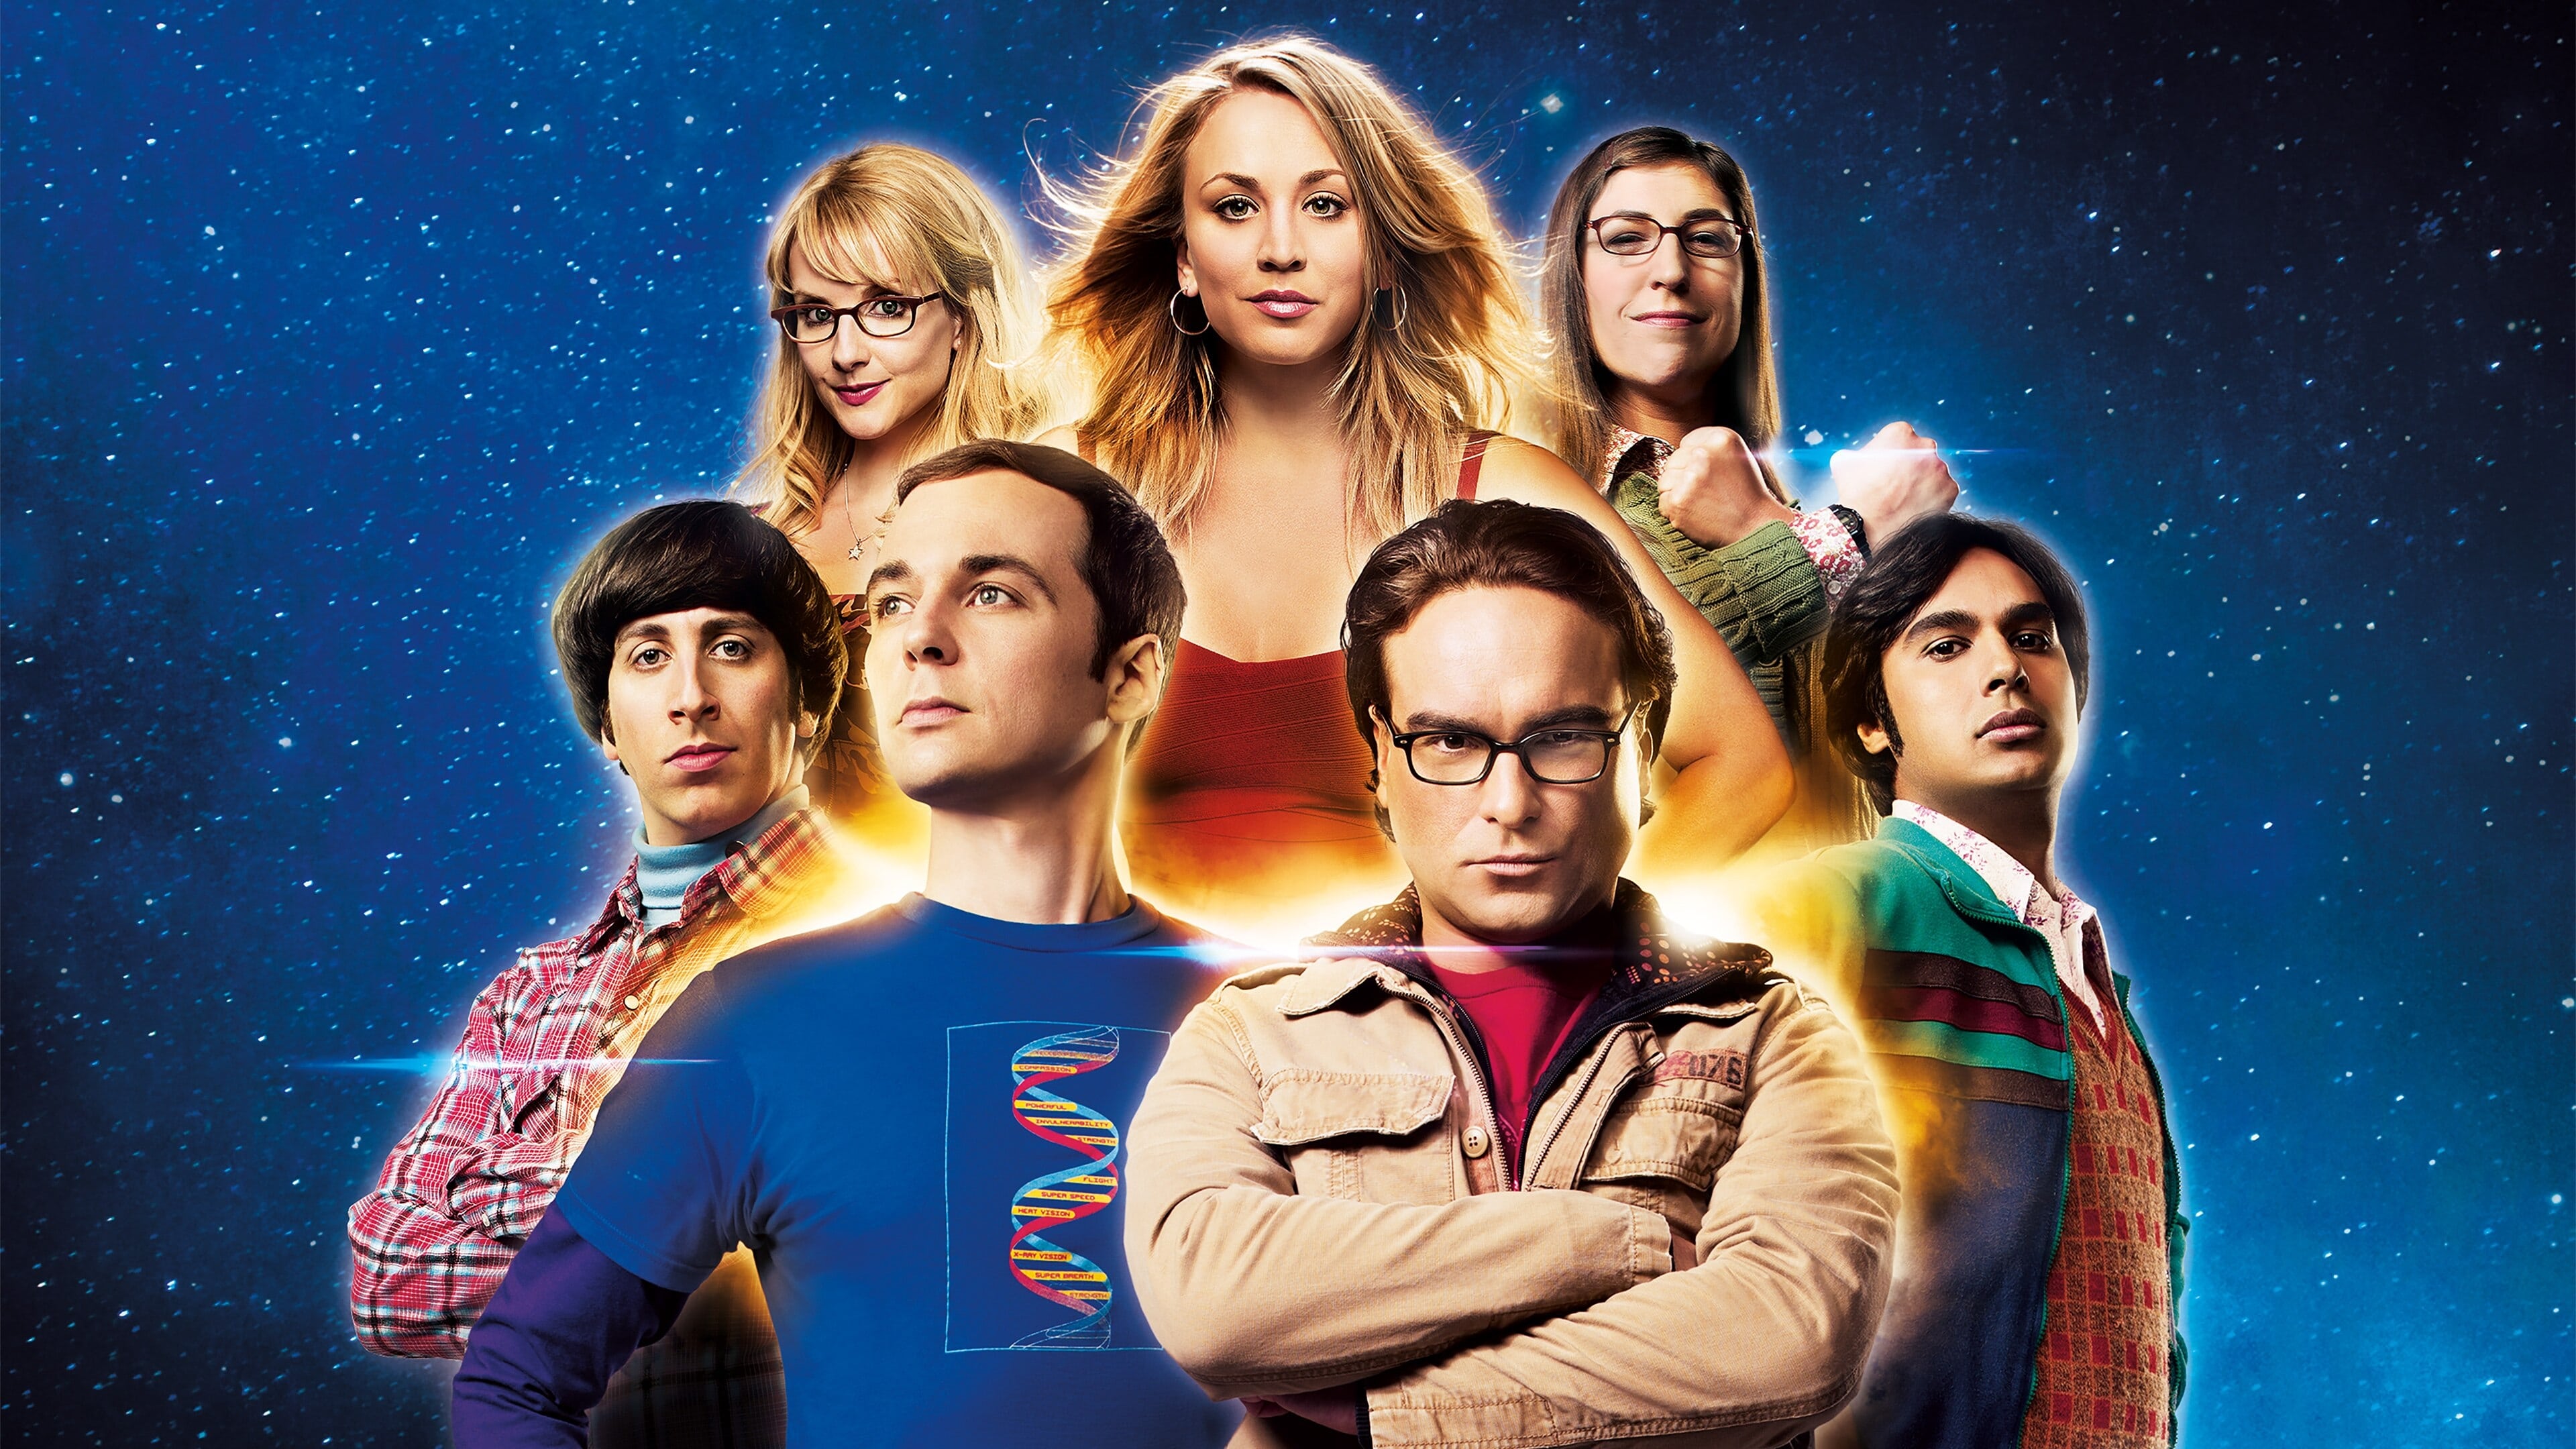 The Big Bang Theory Season 6 (2012) ทฤษฎีวุ่นหัวใจ